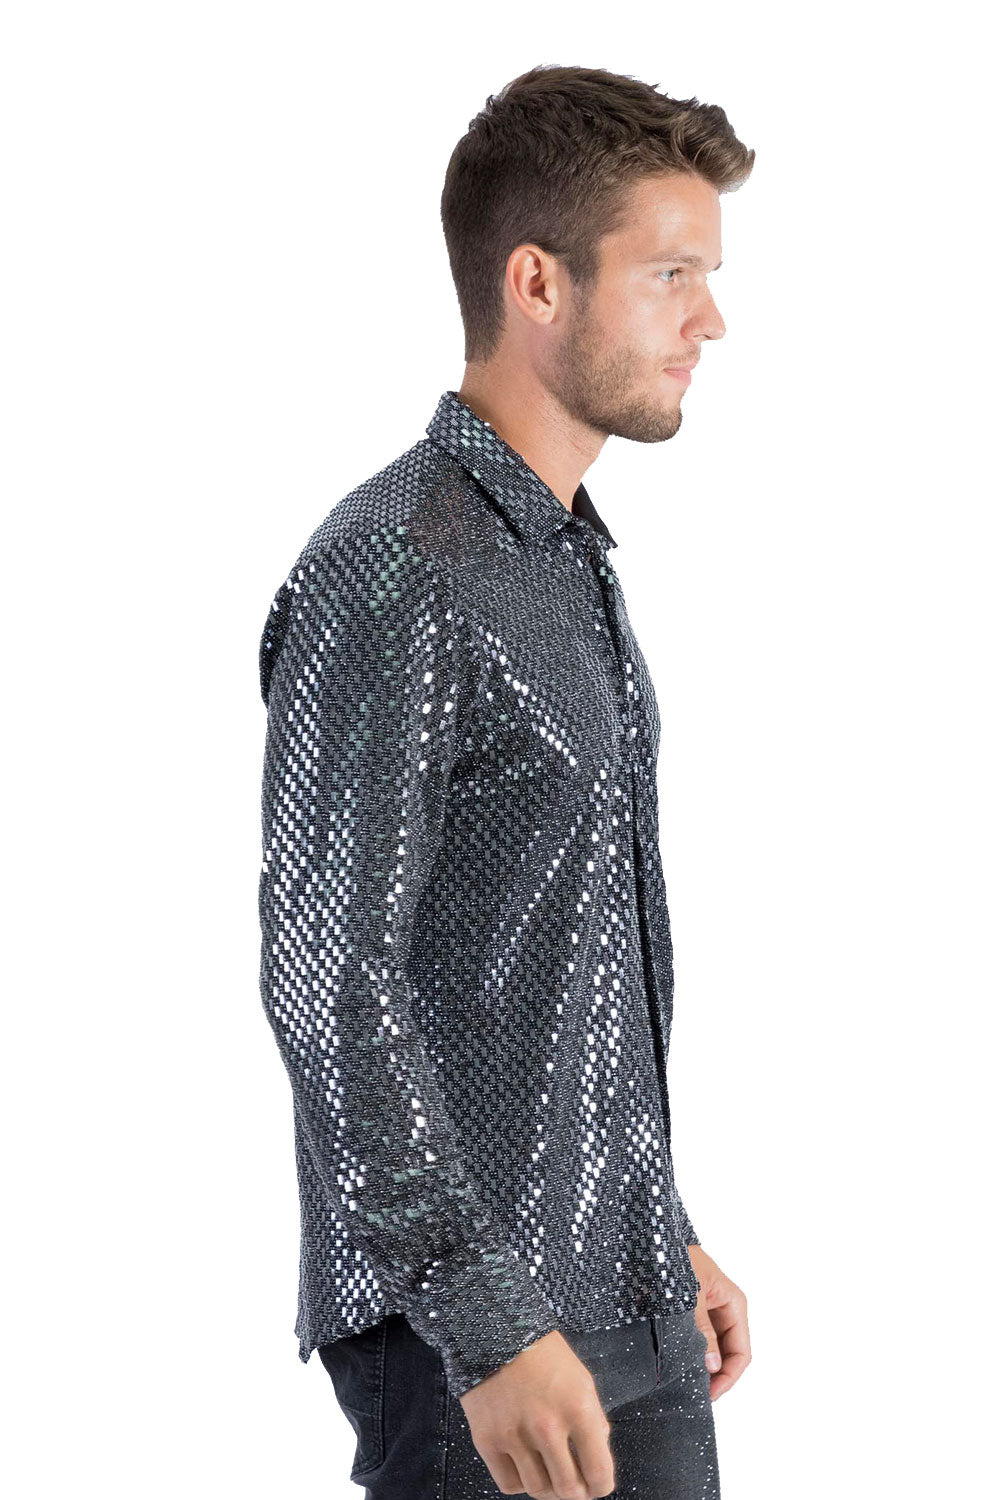 BARABAS Men's Shiny Sparkly Geometric Design Button Down Shirt B300 Black